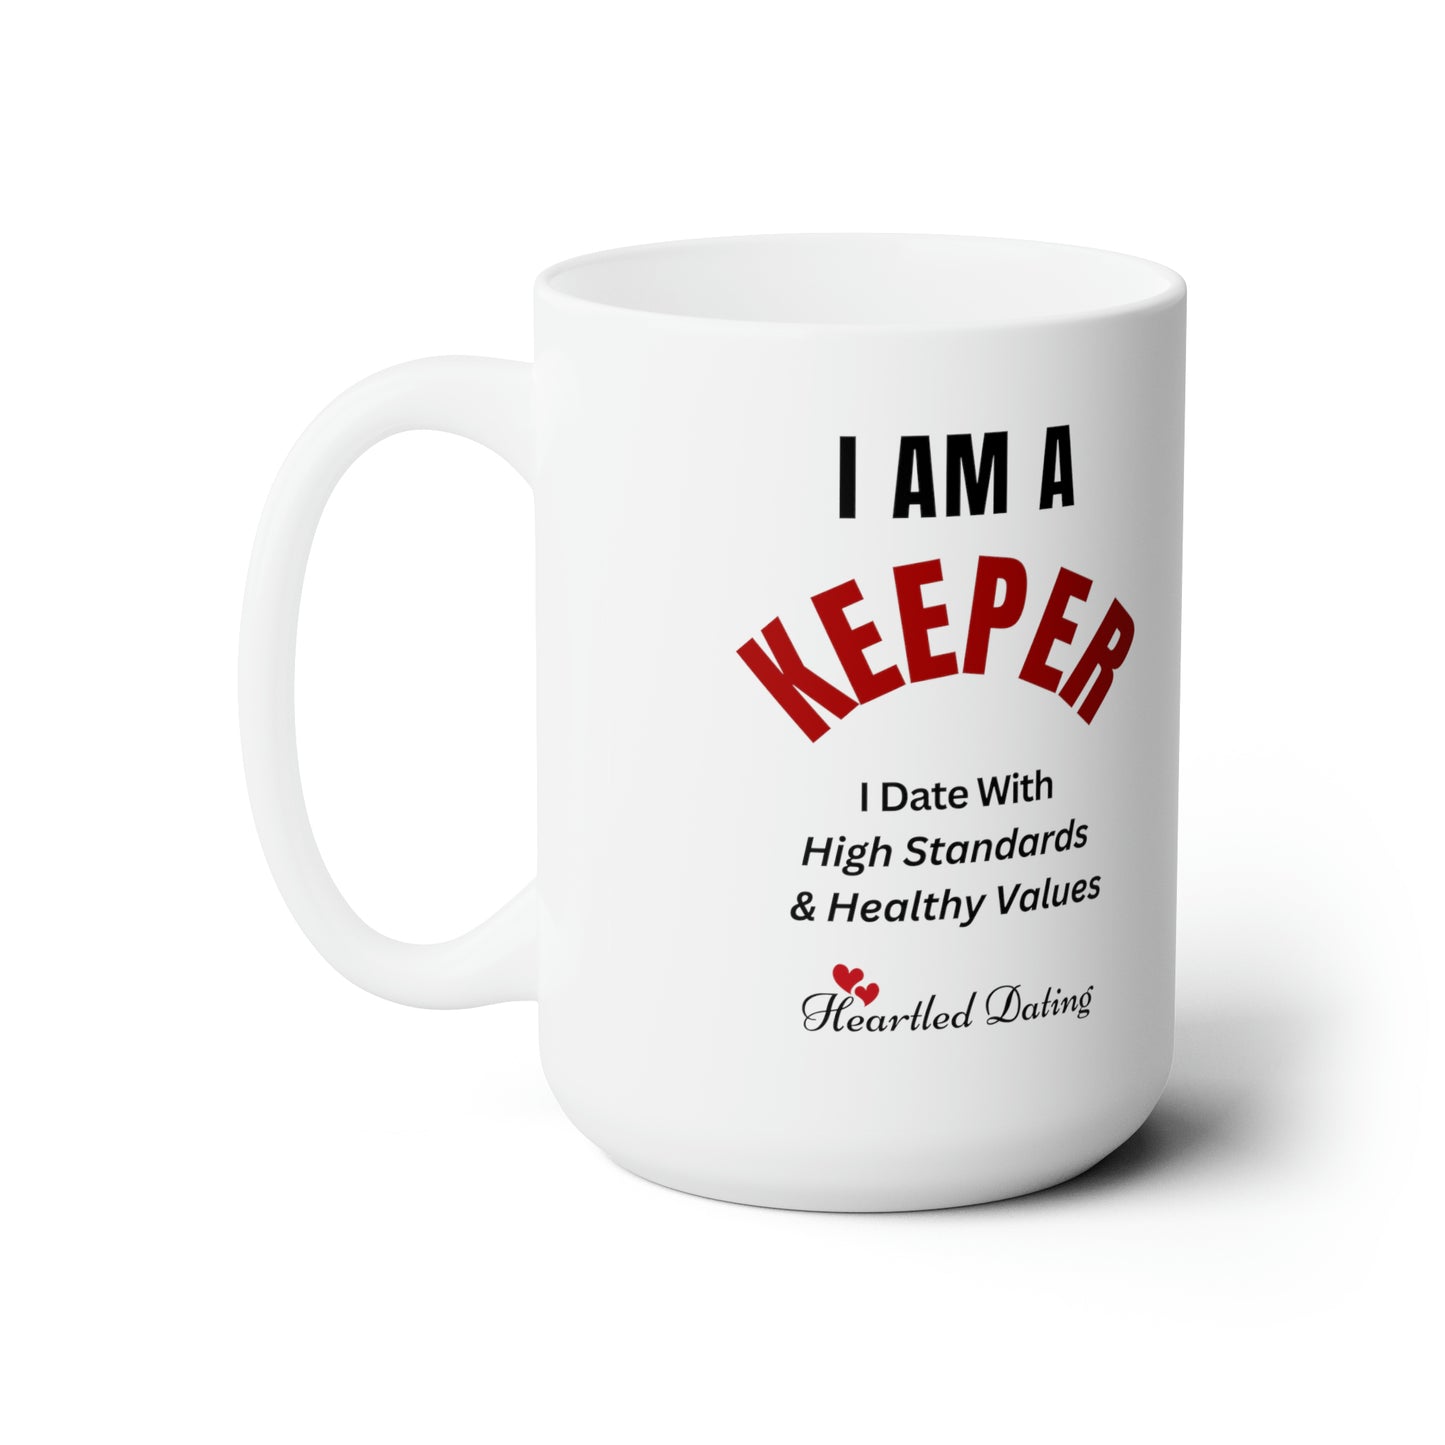 I AM A KEEPER! Ceramic Mug 15oz